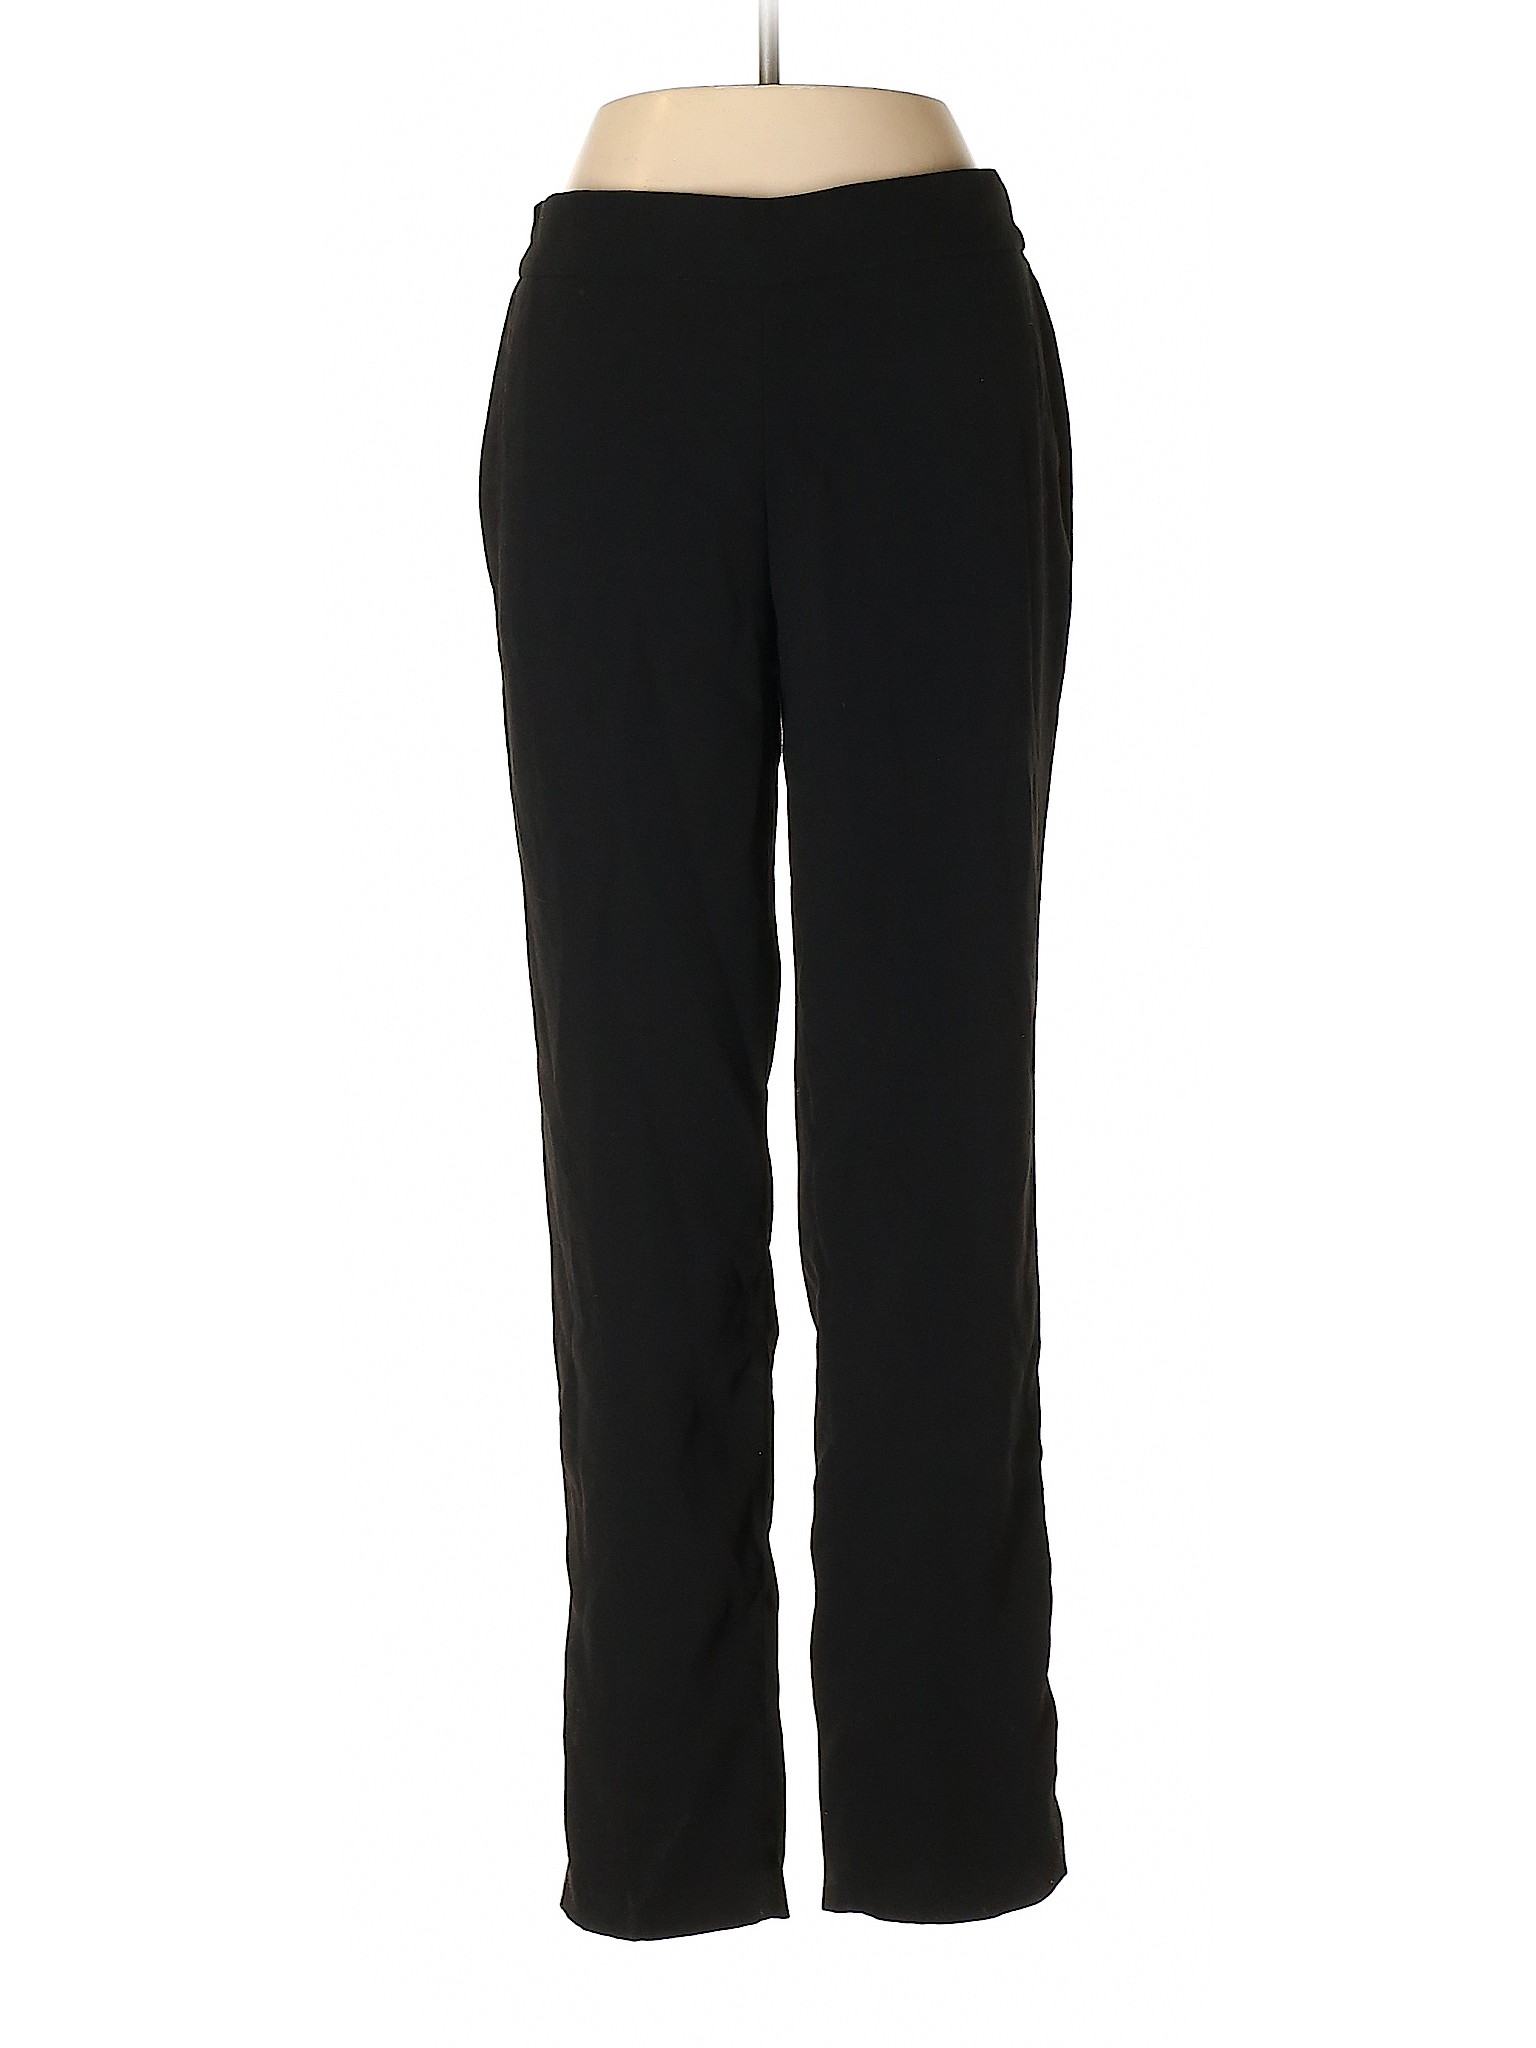 Eliane Rose Women Black Casual Pants 4 | eBay